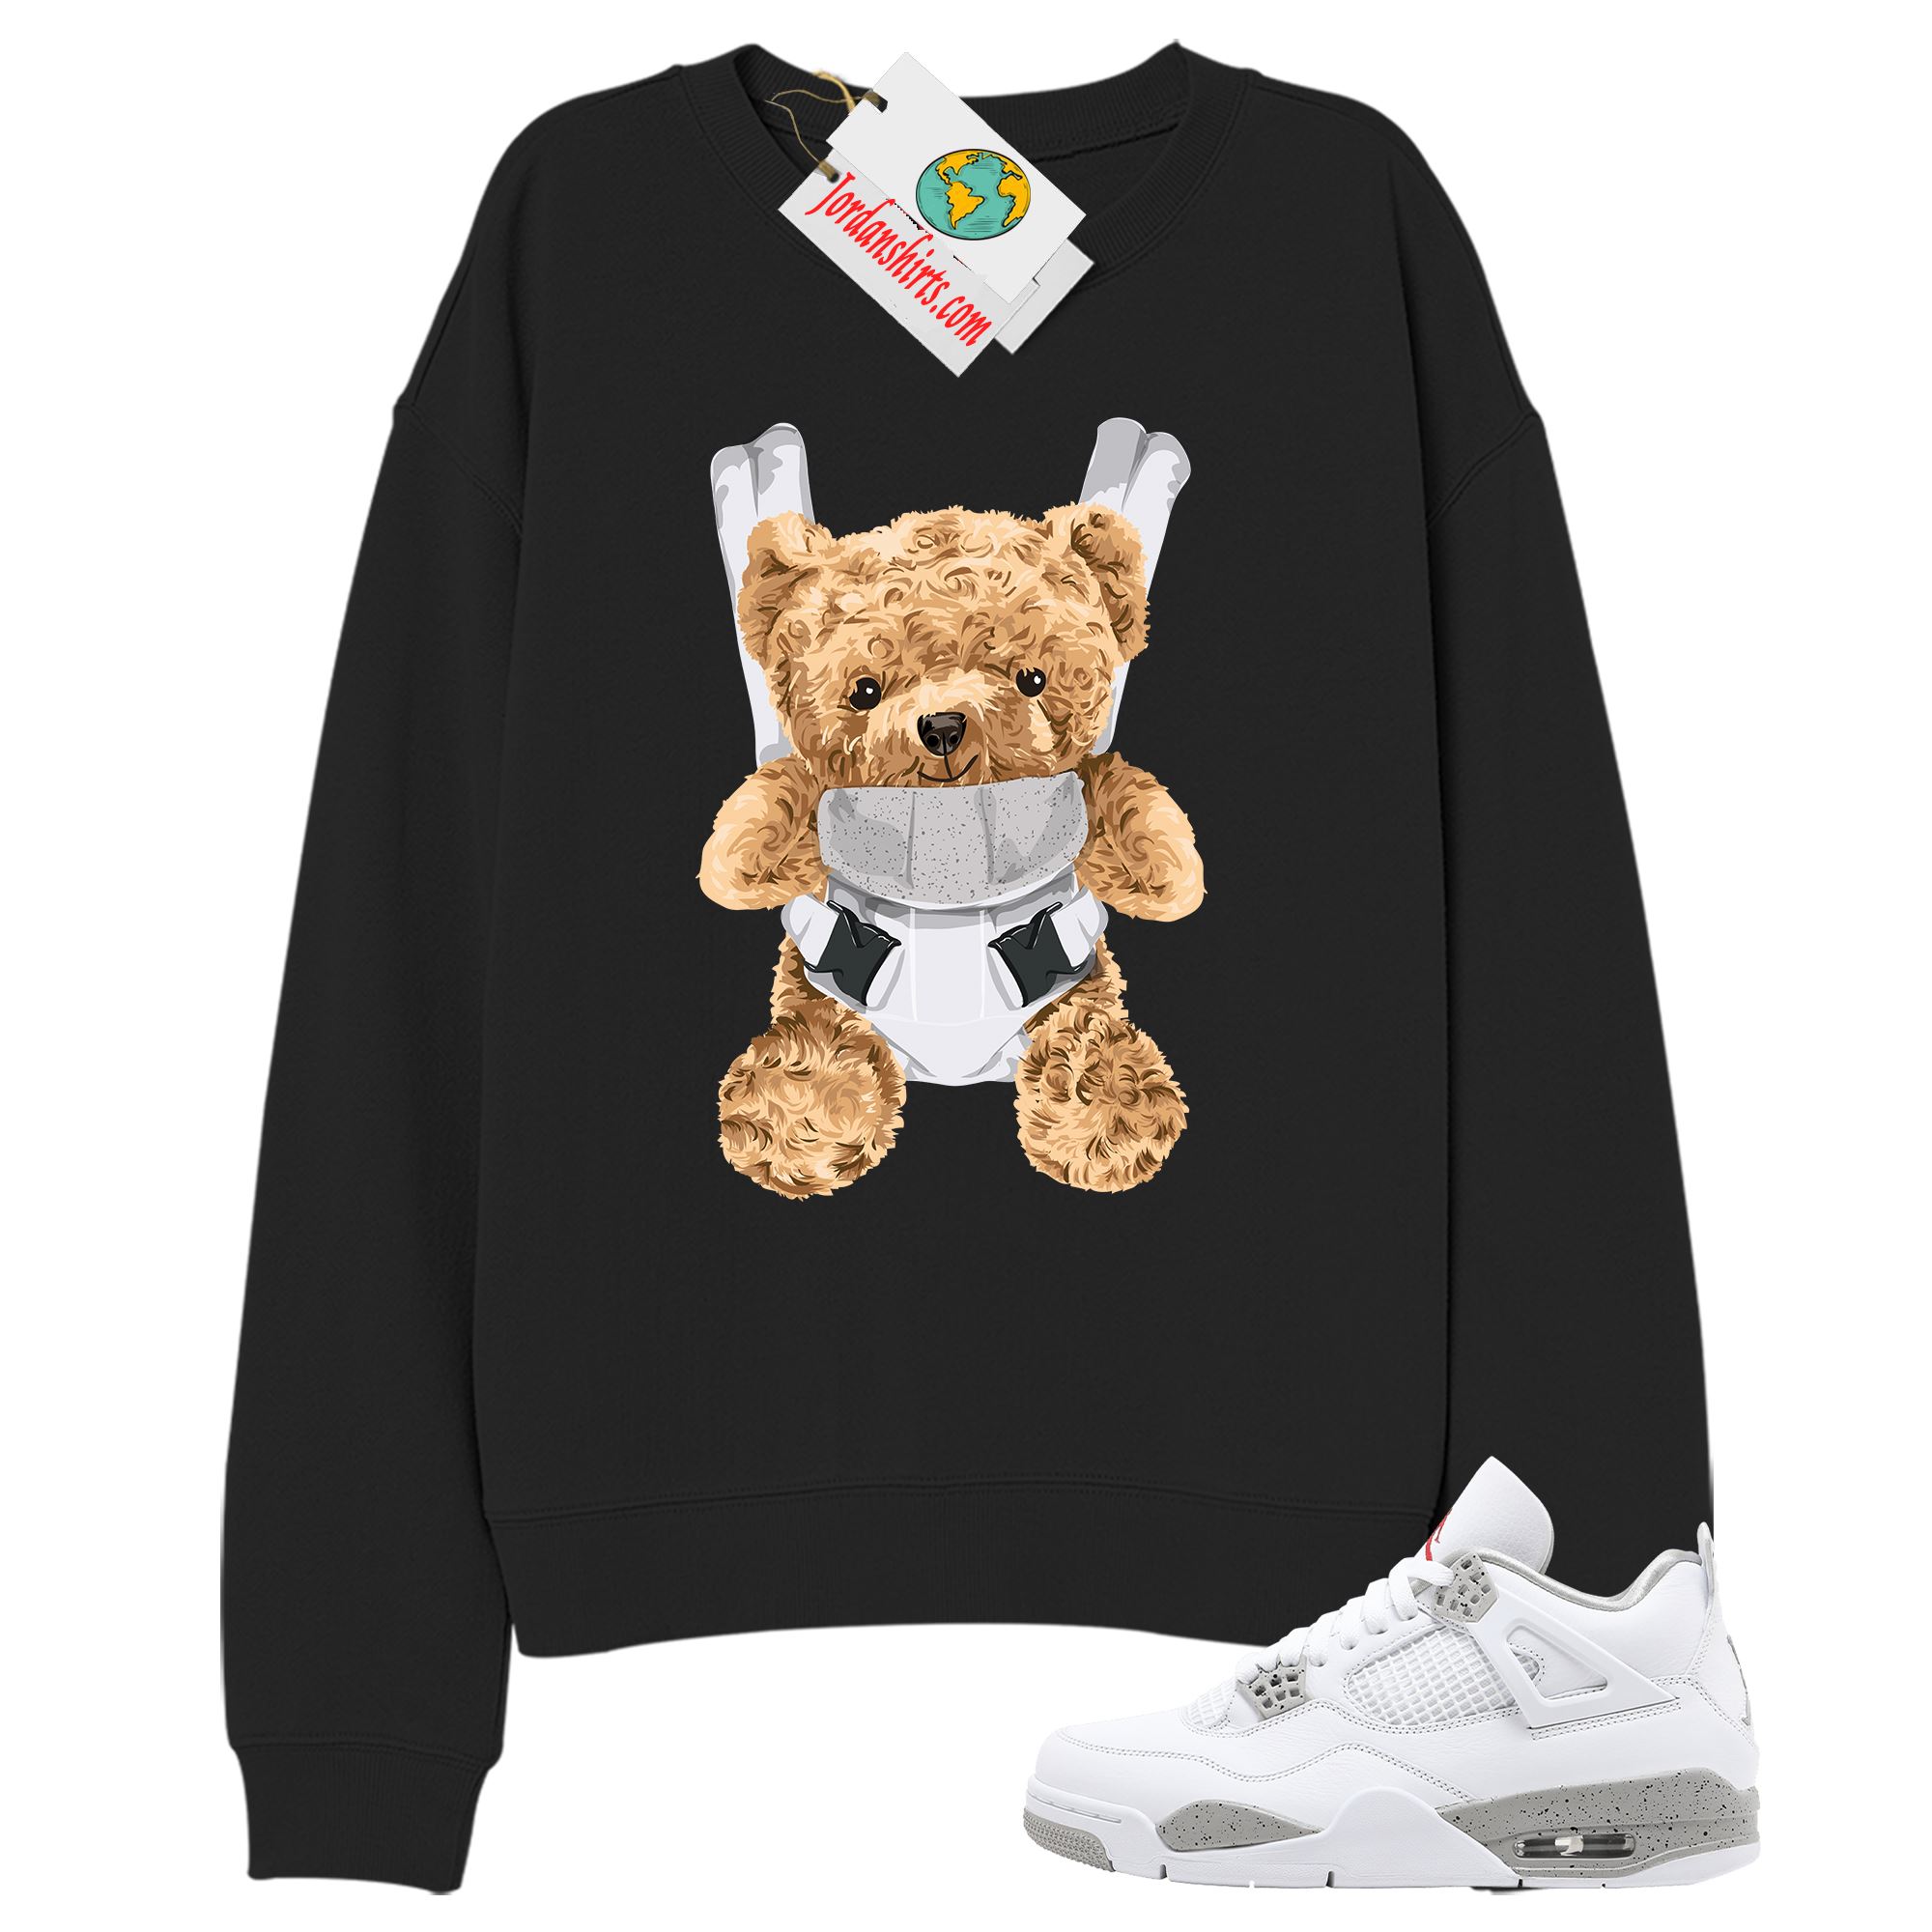 Jordan 4 Sweatshirt, Teddy Bear Bag Black Sweatshirt Air Jordan 4 White Oreo 4s Plus Size Up To 5xl